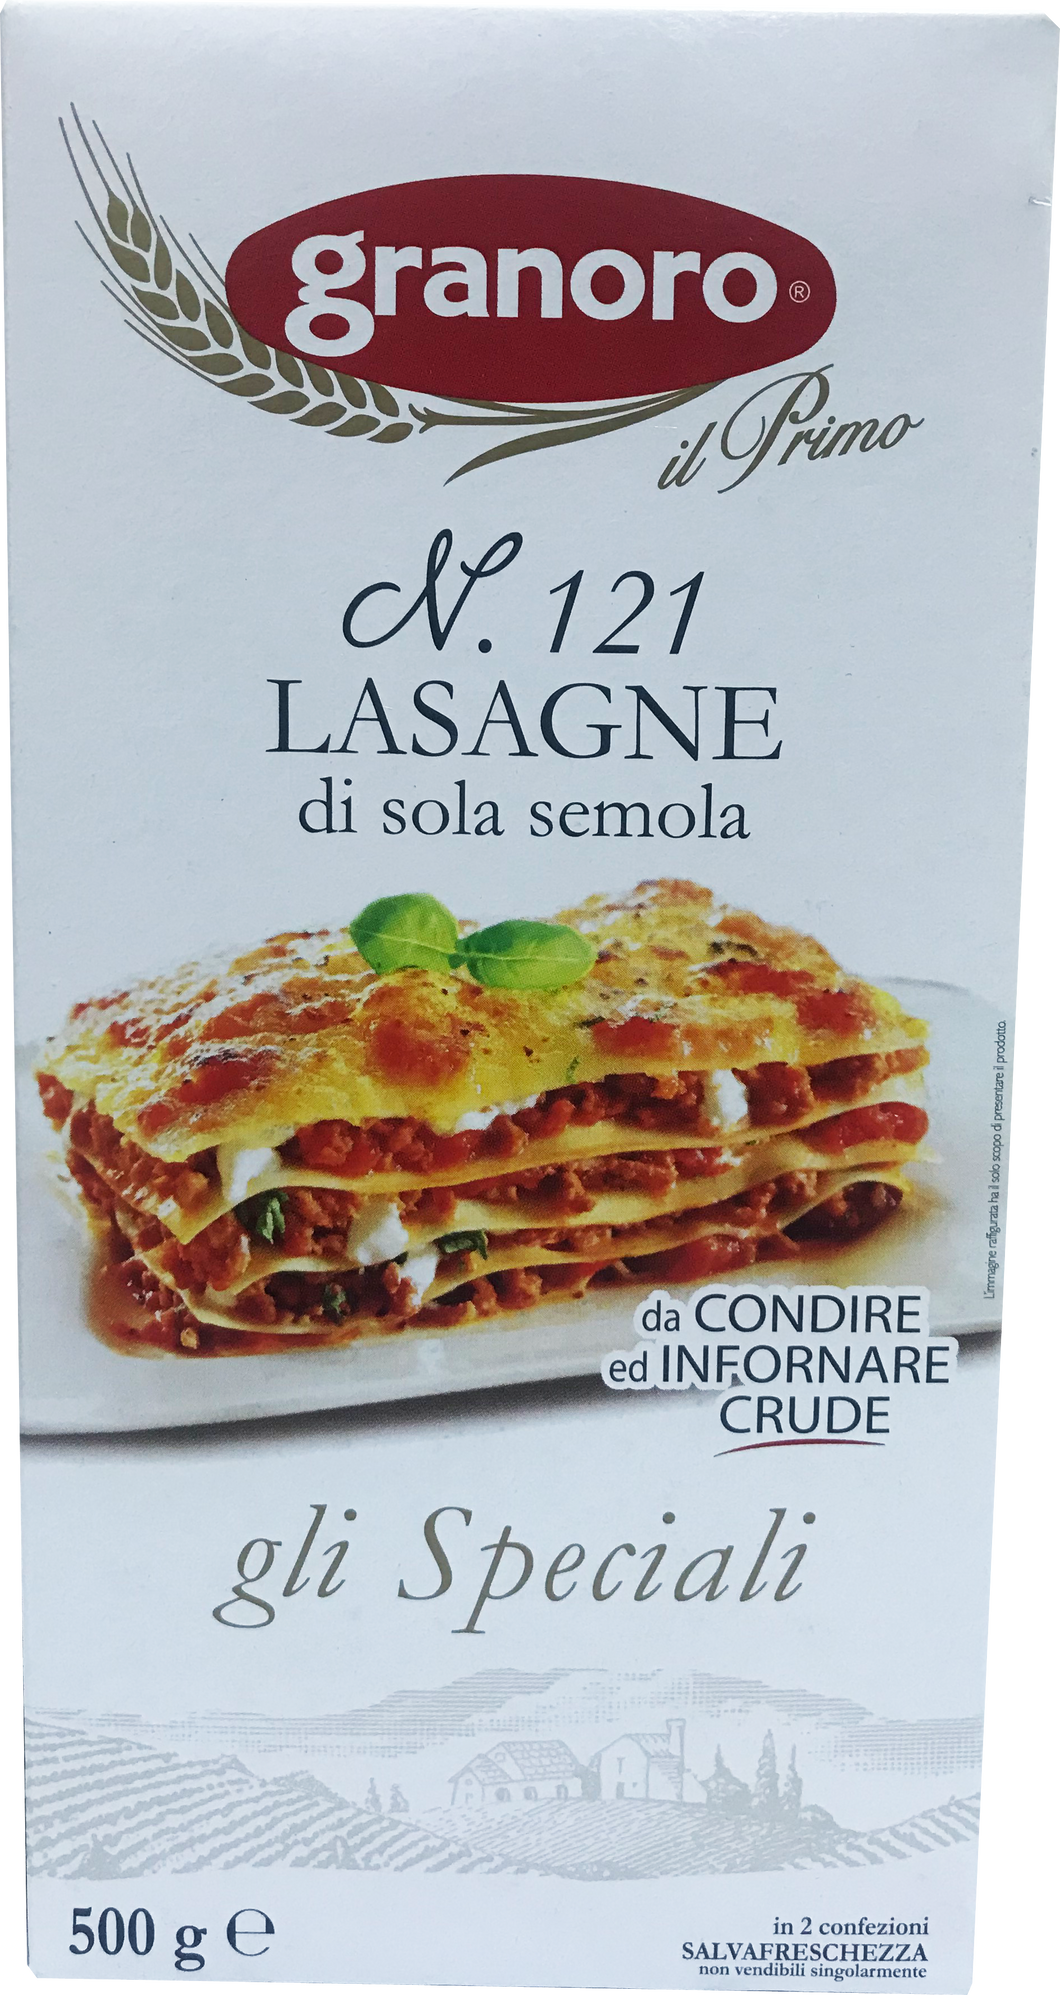 Lasagna - Granoro Lasagne Semola 500g.